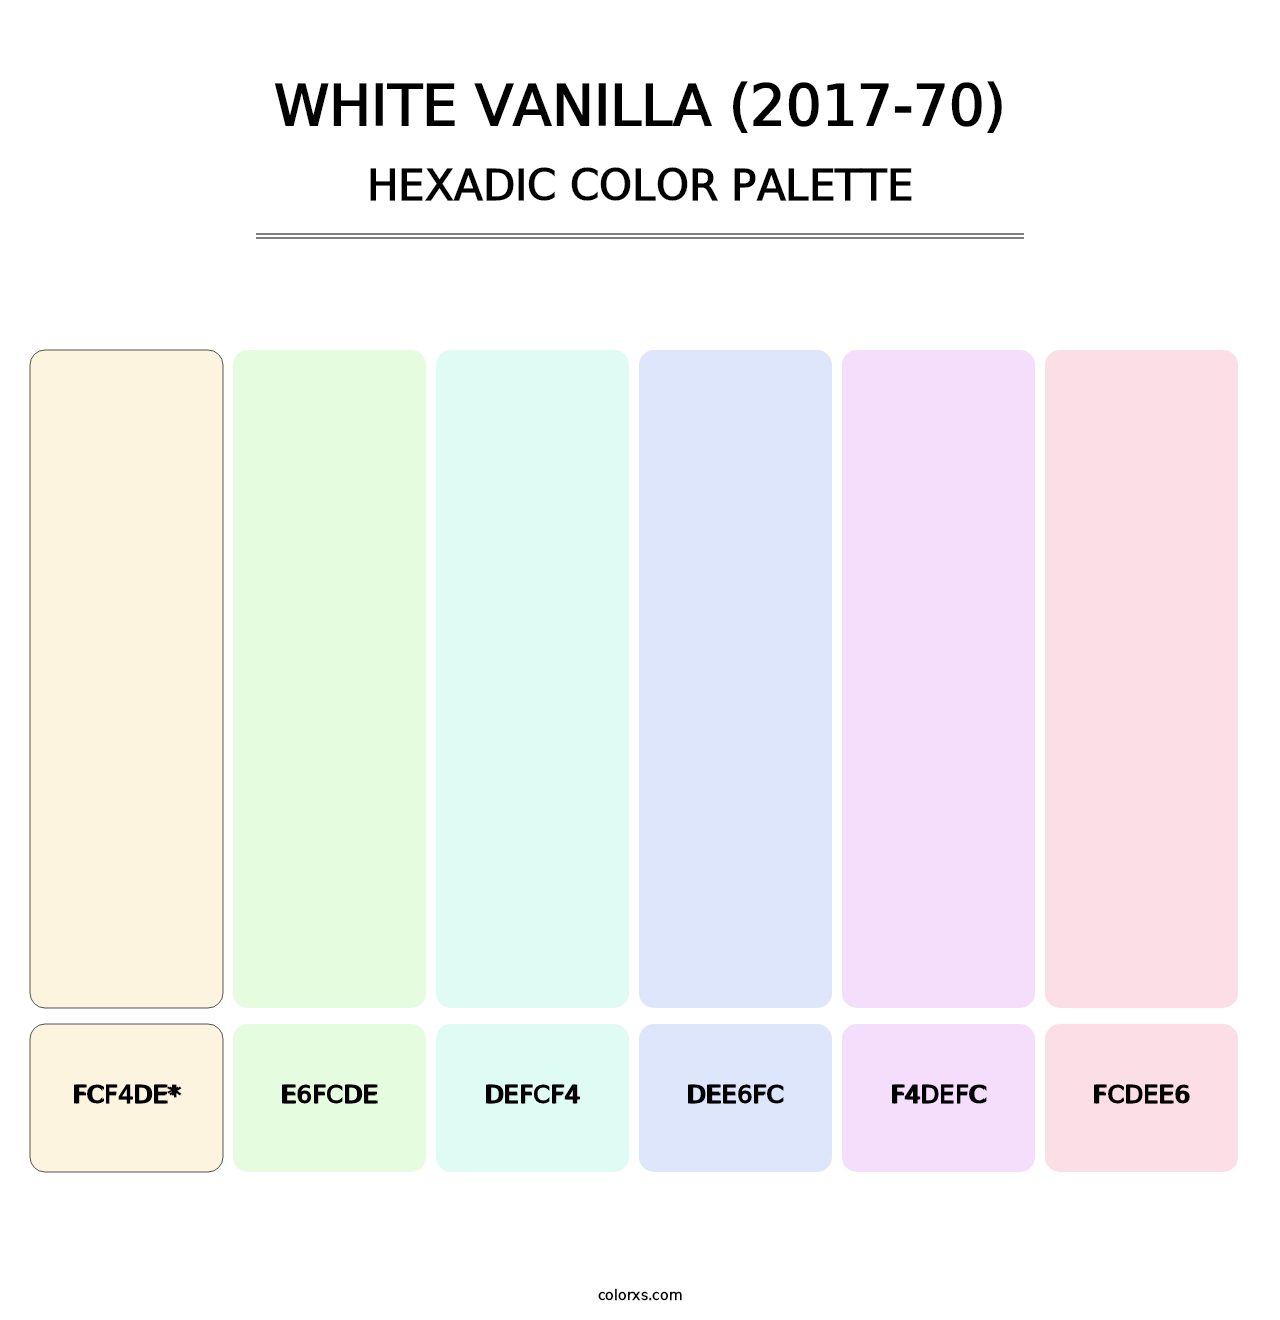 White Vanilla (2017-70) - Hexadic Color Palette